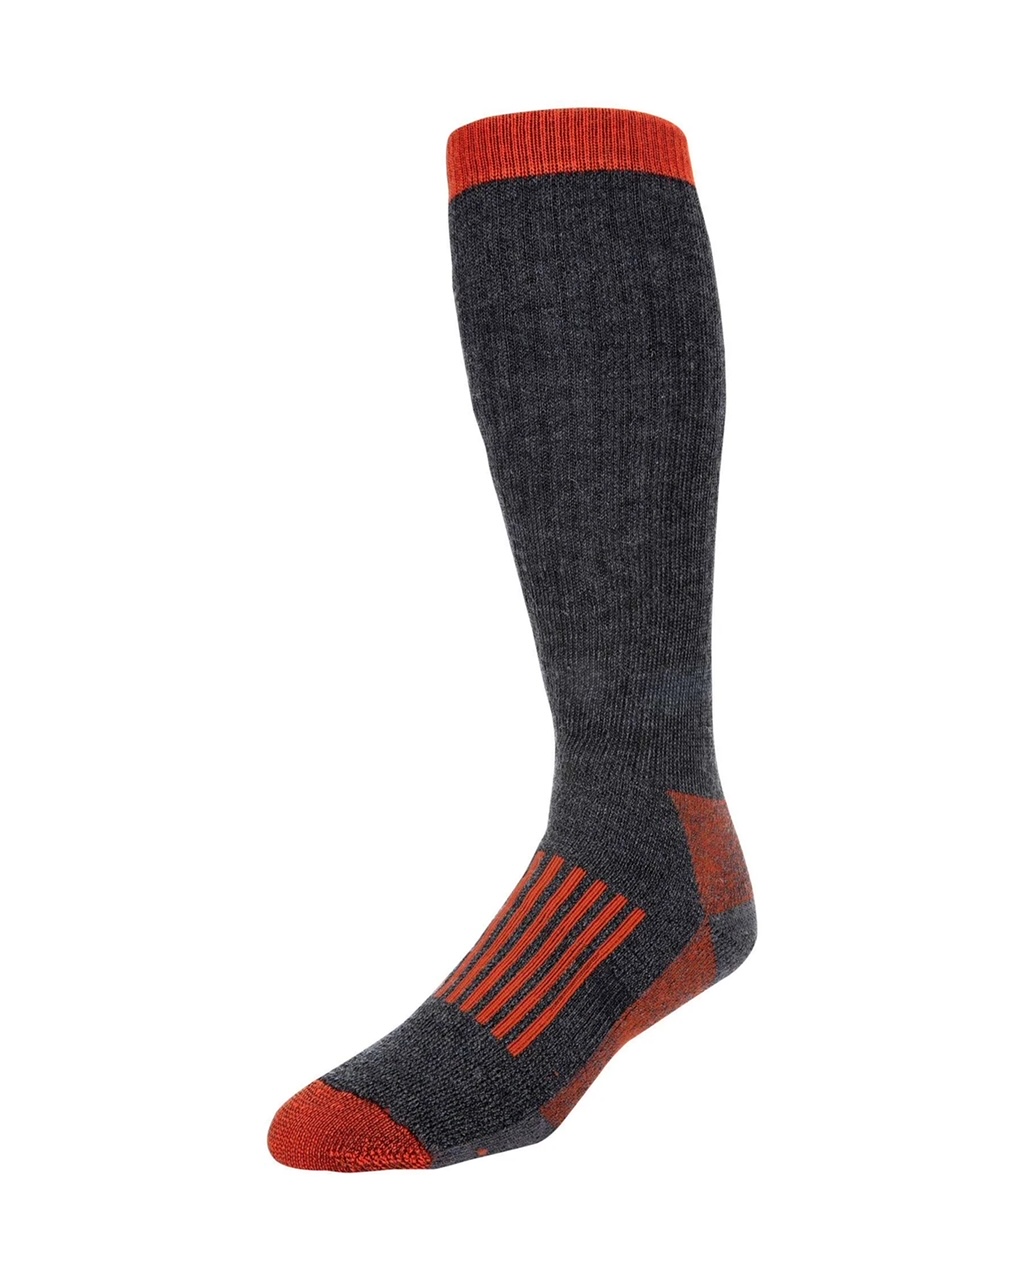 Simms M's Merino Thermal OTC Socks - XL